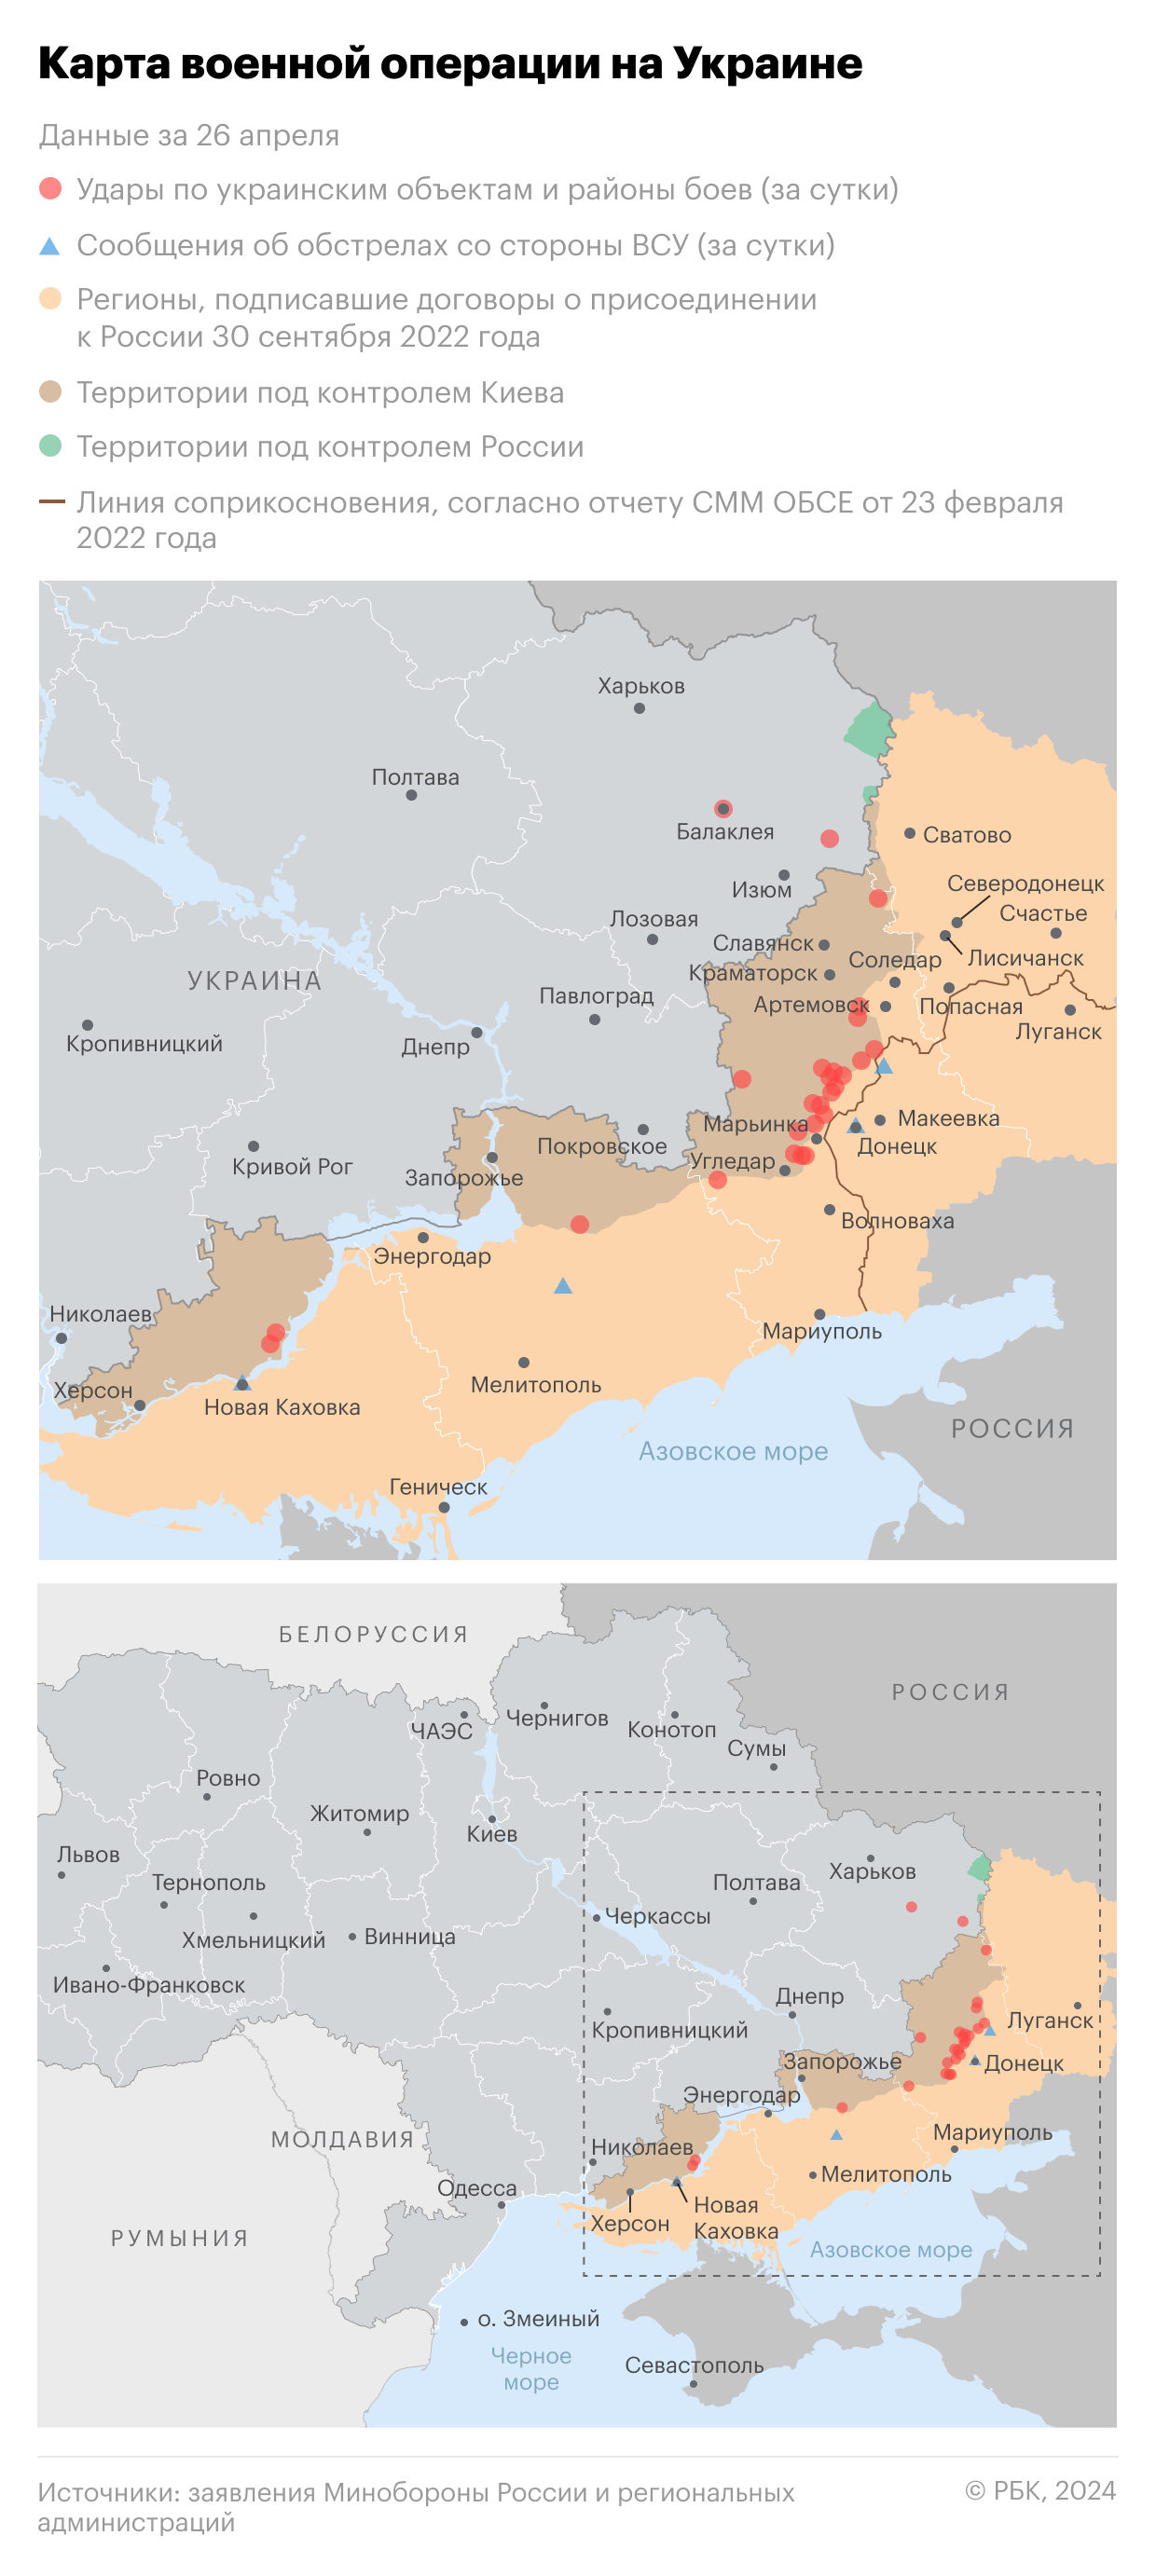 Пентагон заявил о снижении риска эскалации конфликта на Украине